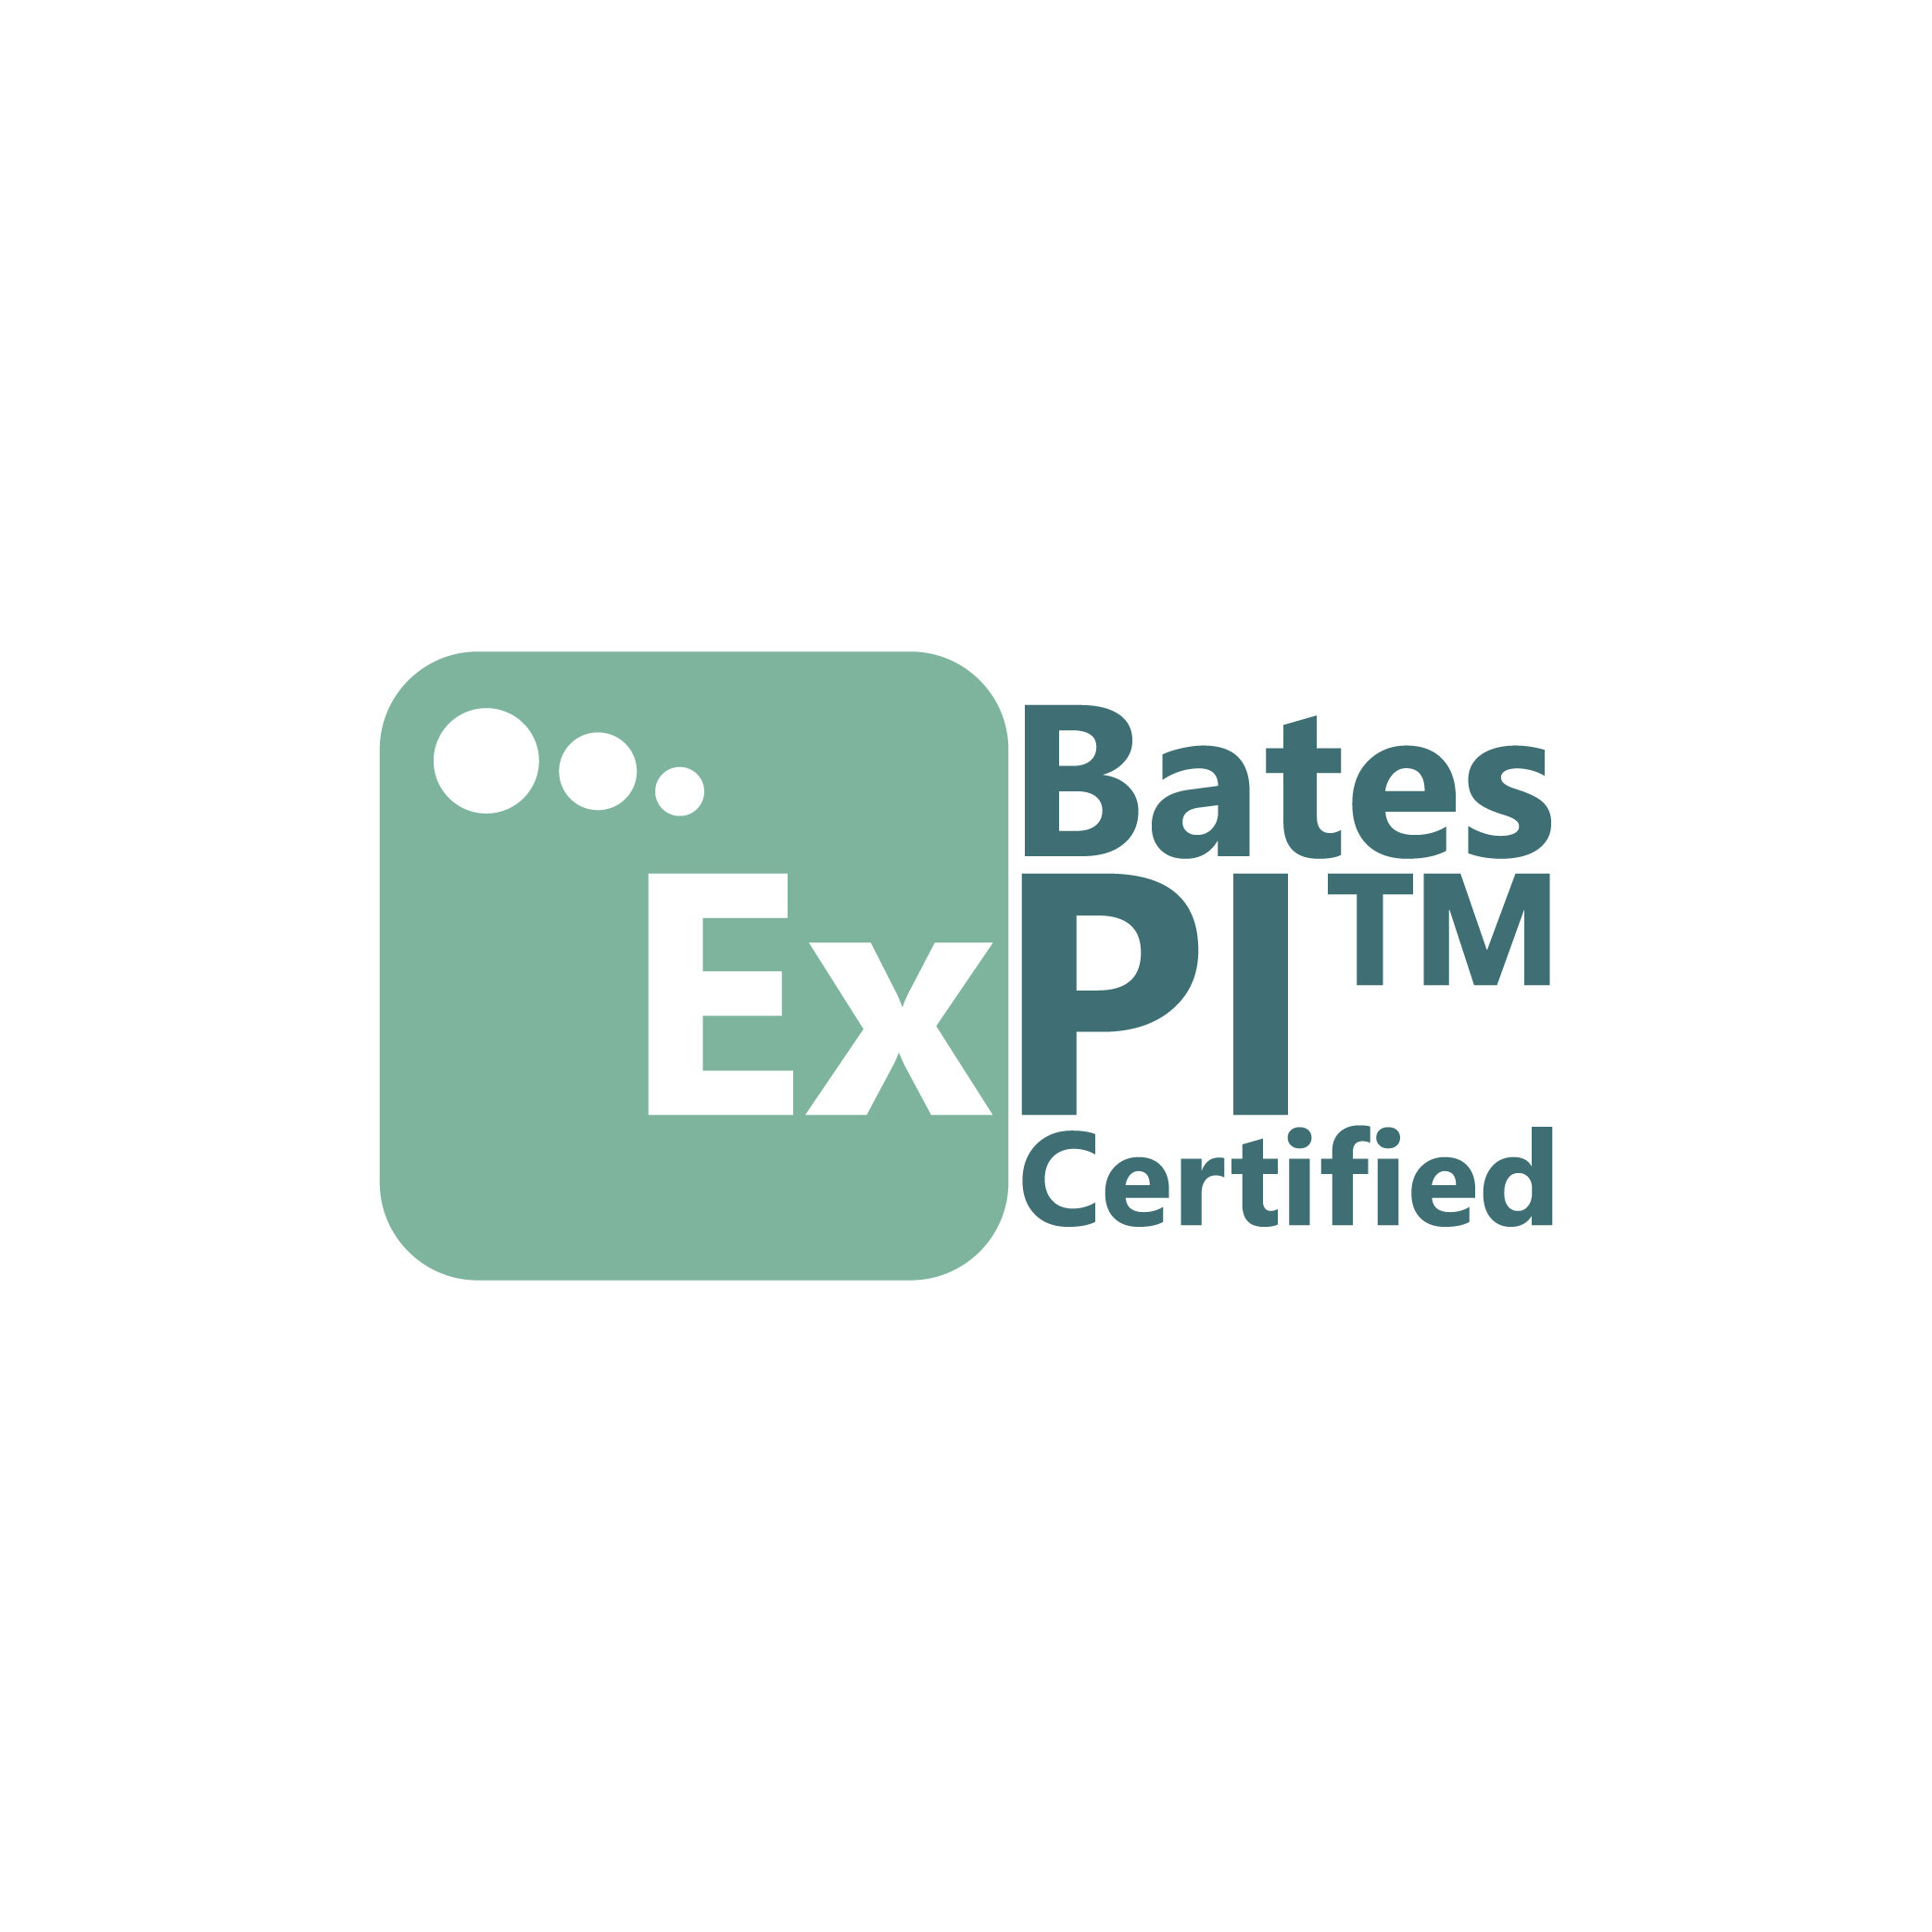 Bates ExPI Certified-01-01 (1).jpg